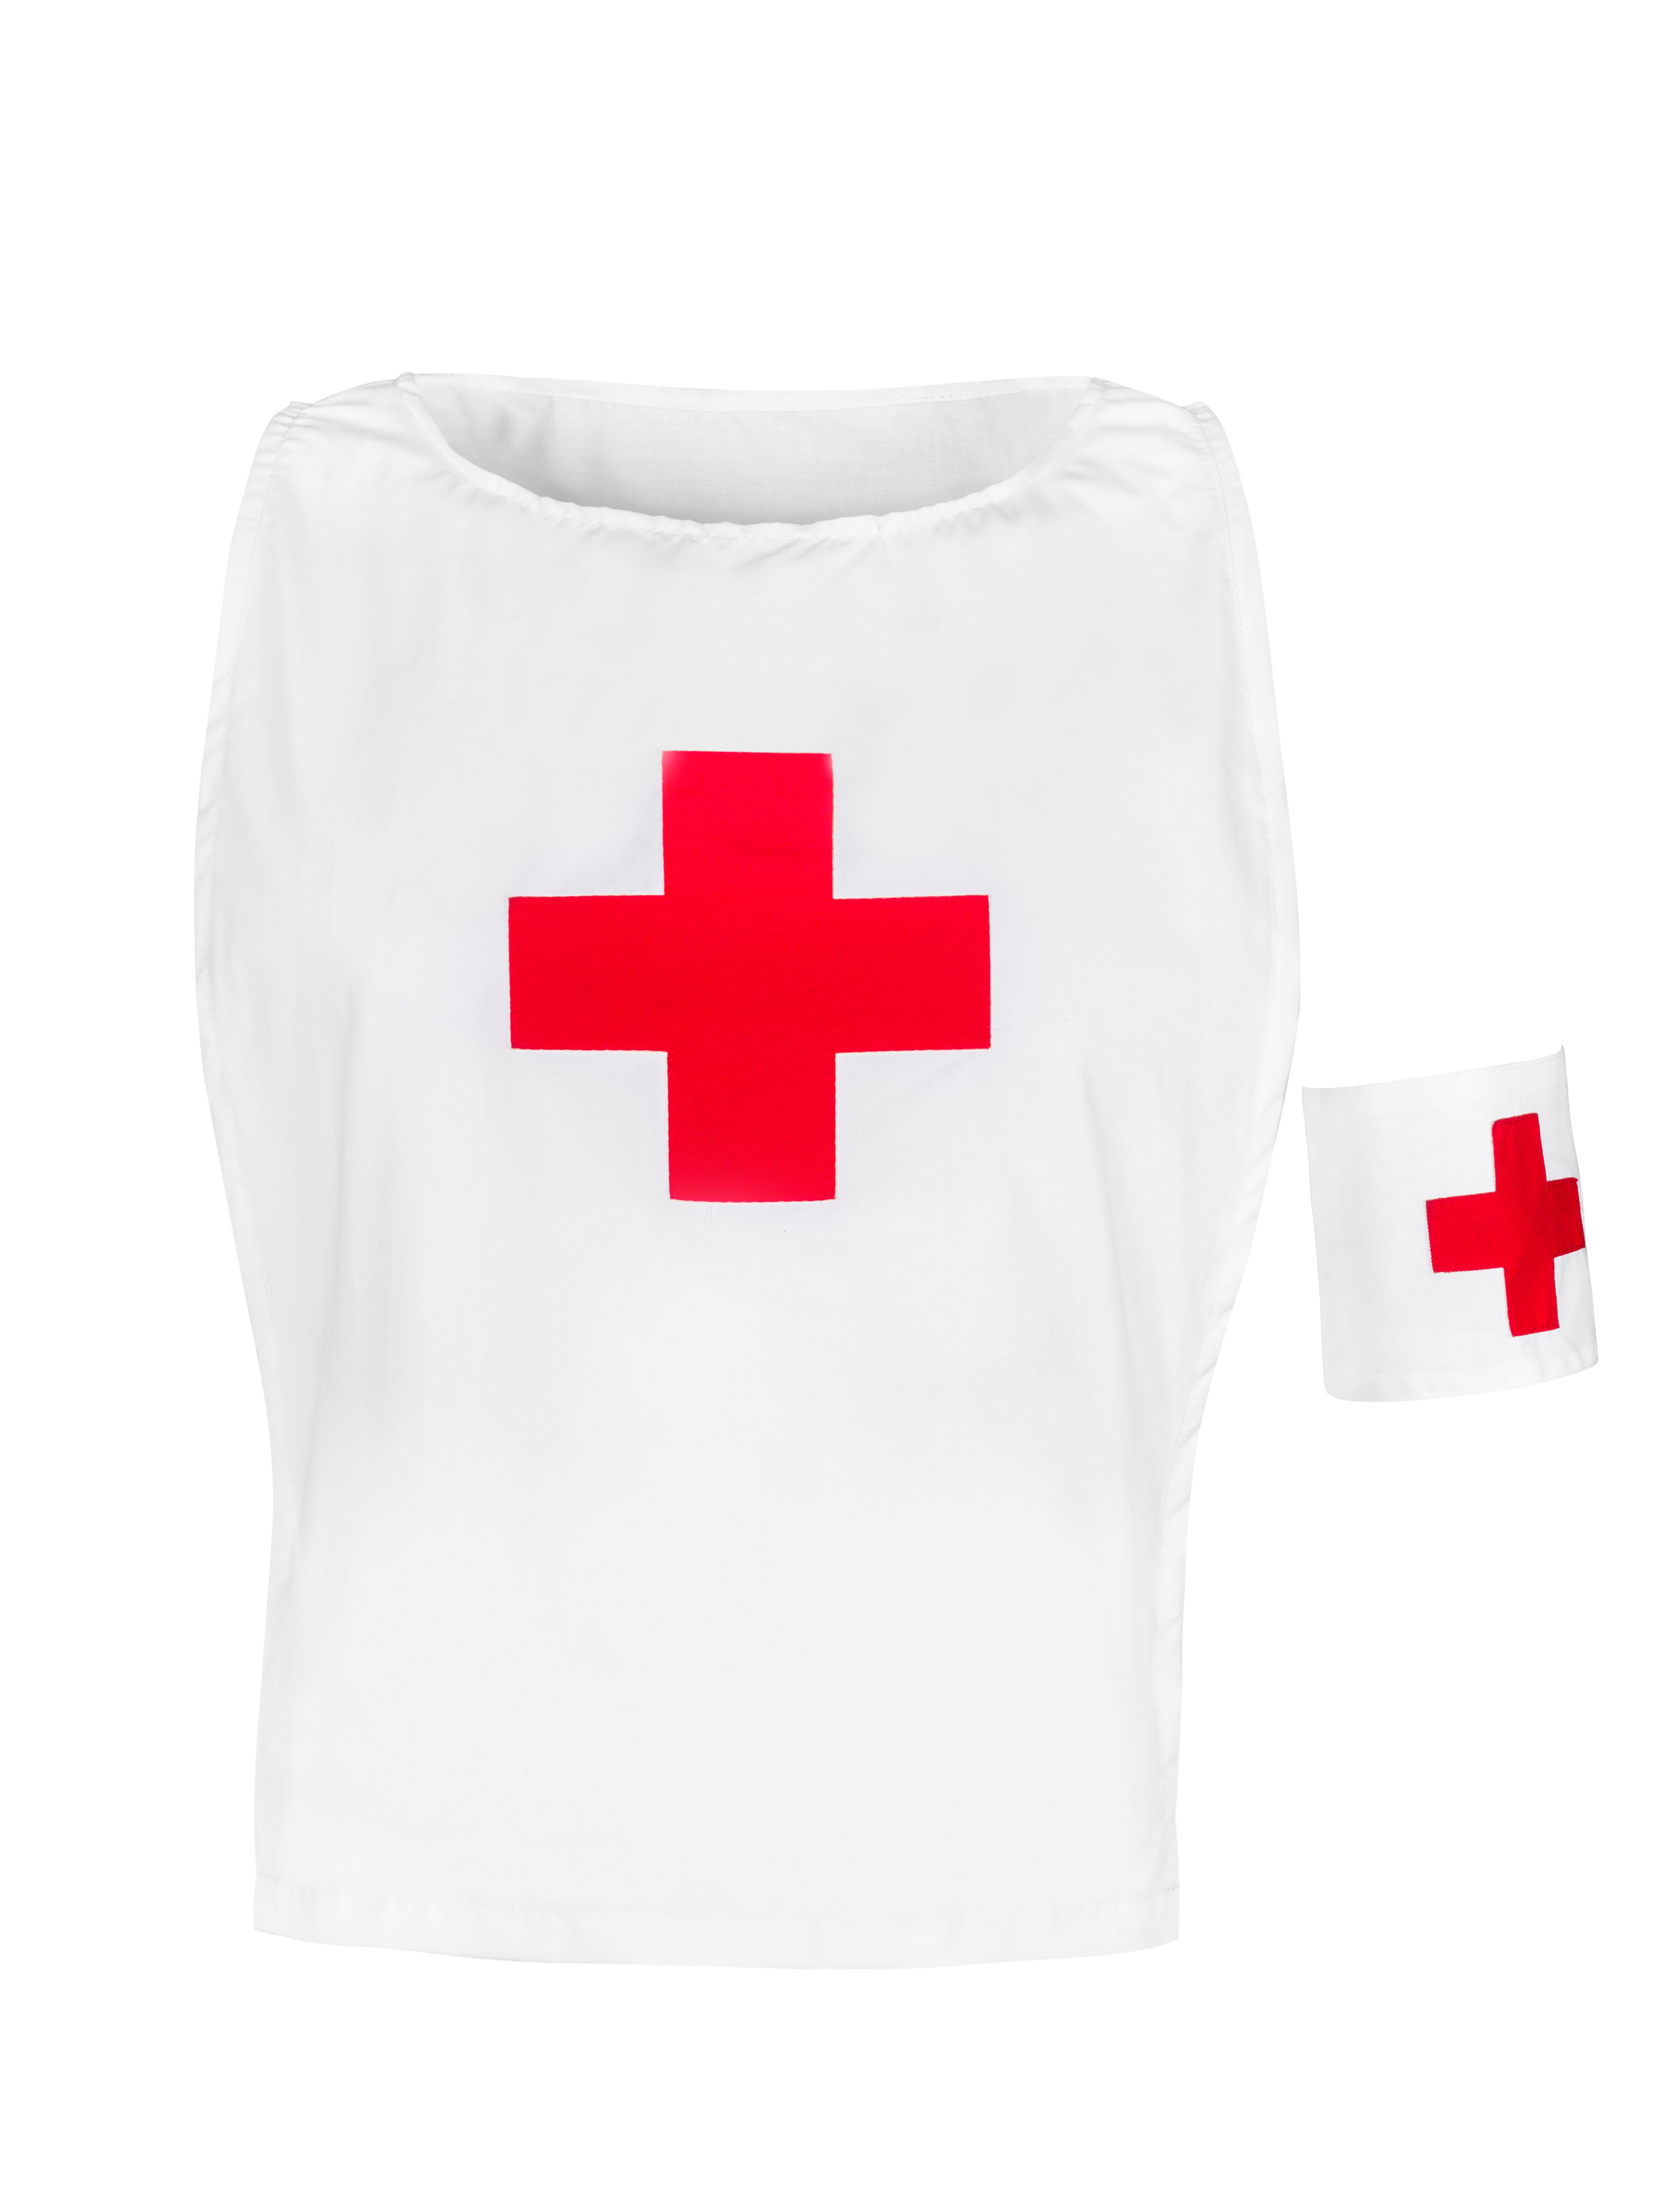 Nurses Uniform - Red Cross Apron and Button Hat Reenactment